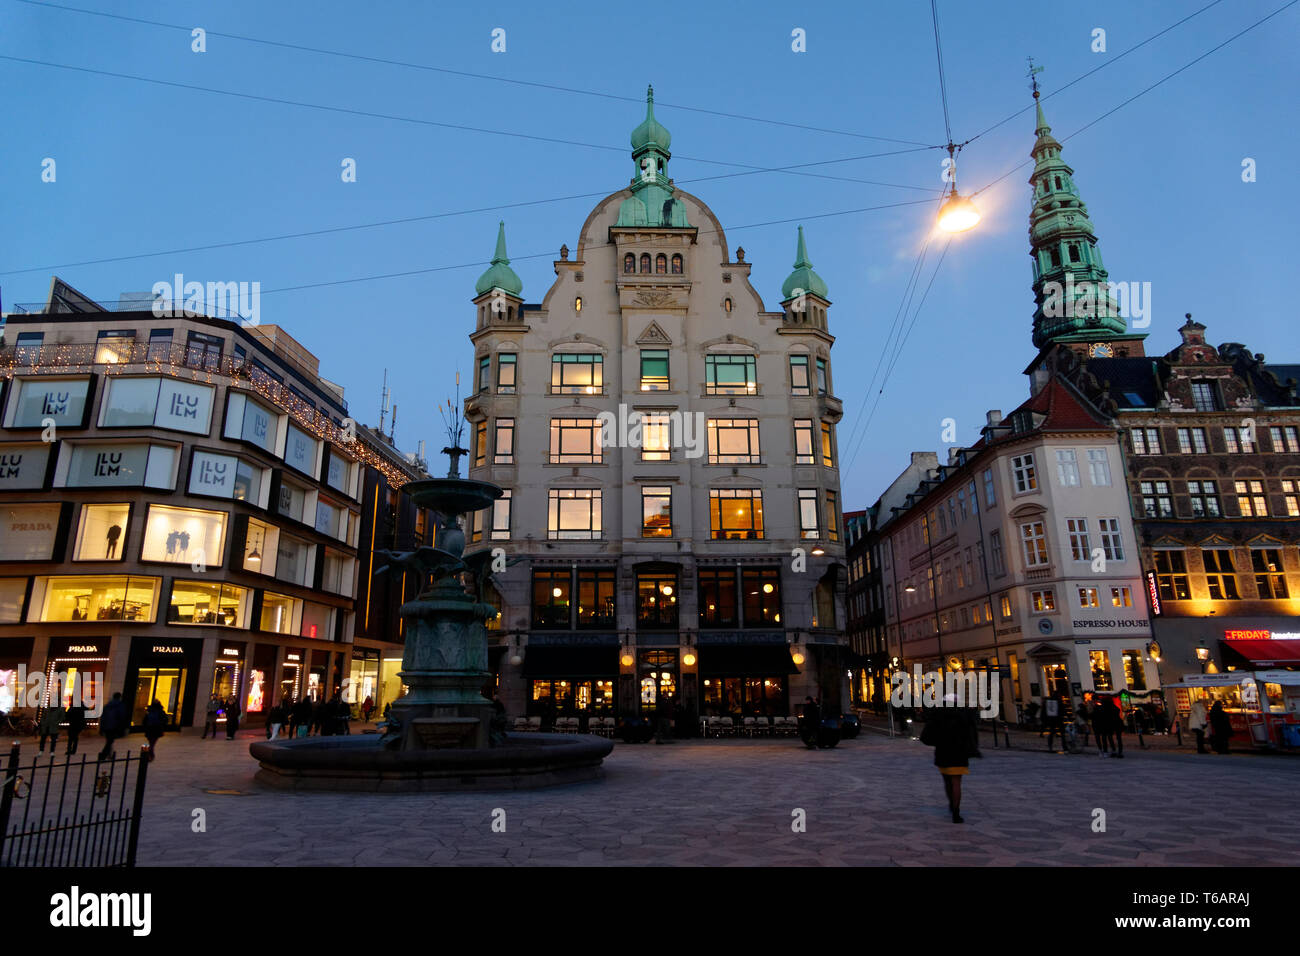 Gammel Torv, the Old Square, Stroget pedestrian street at night, Copenhagen, Denmark, Scandinavia, Europe Stock Photo